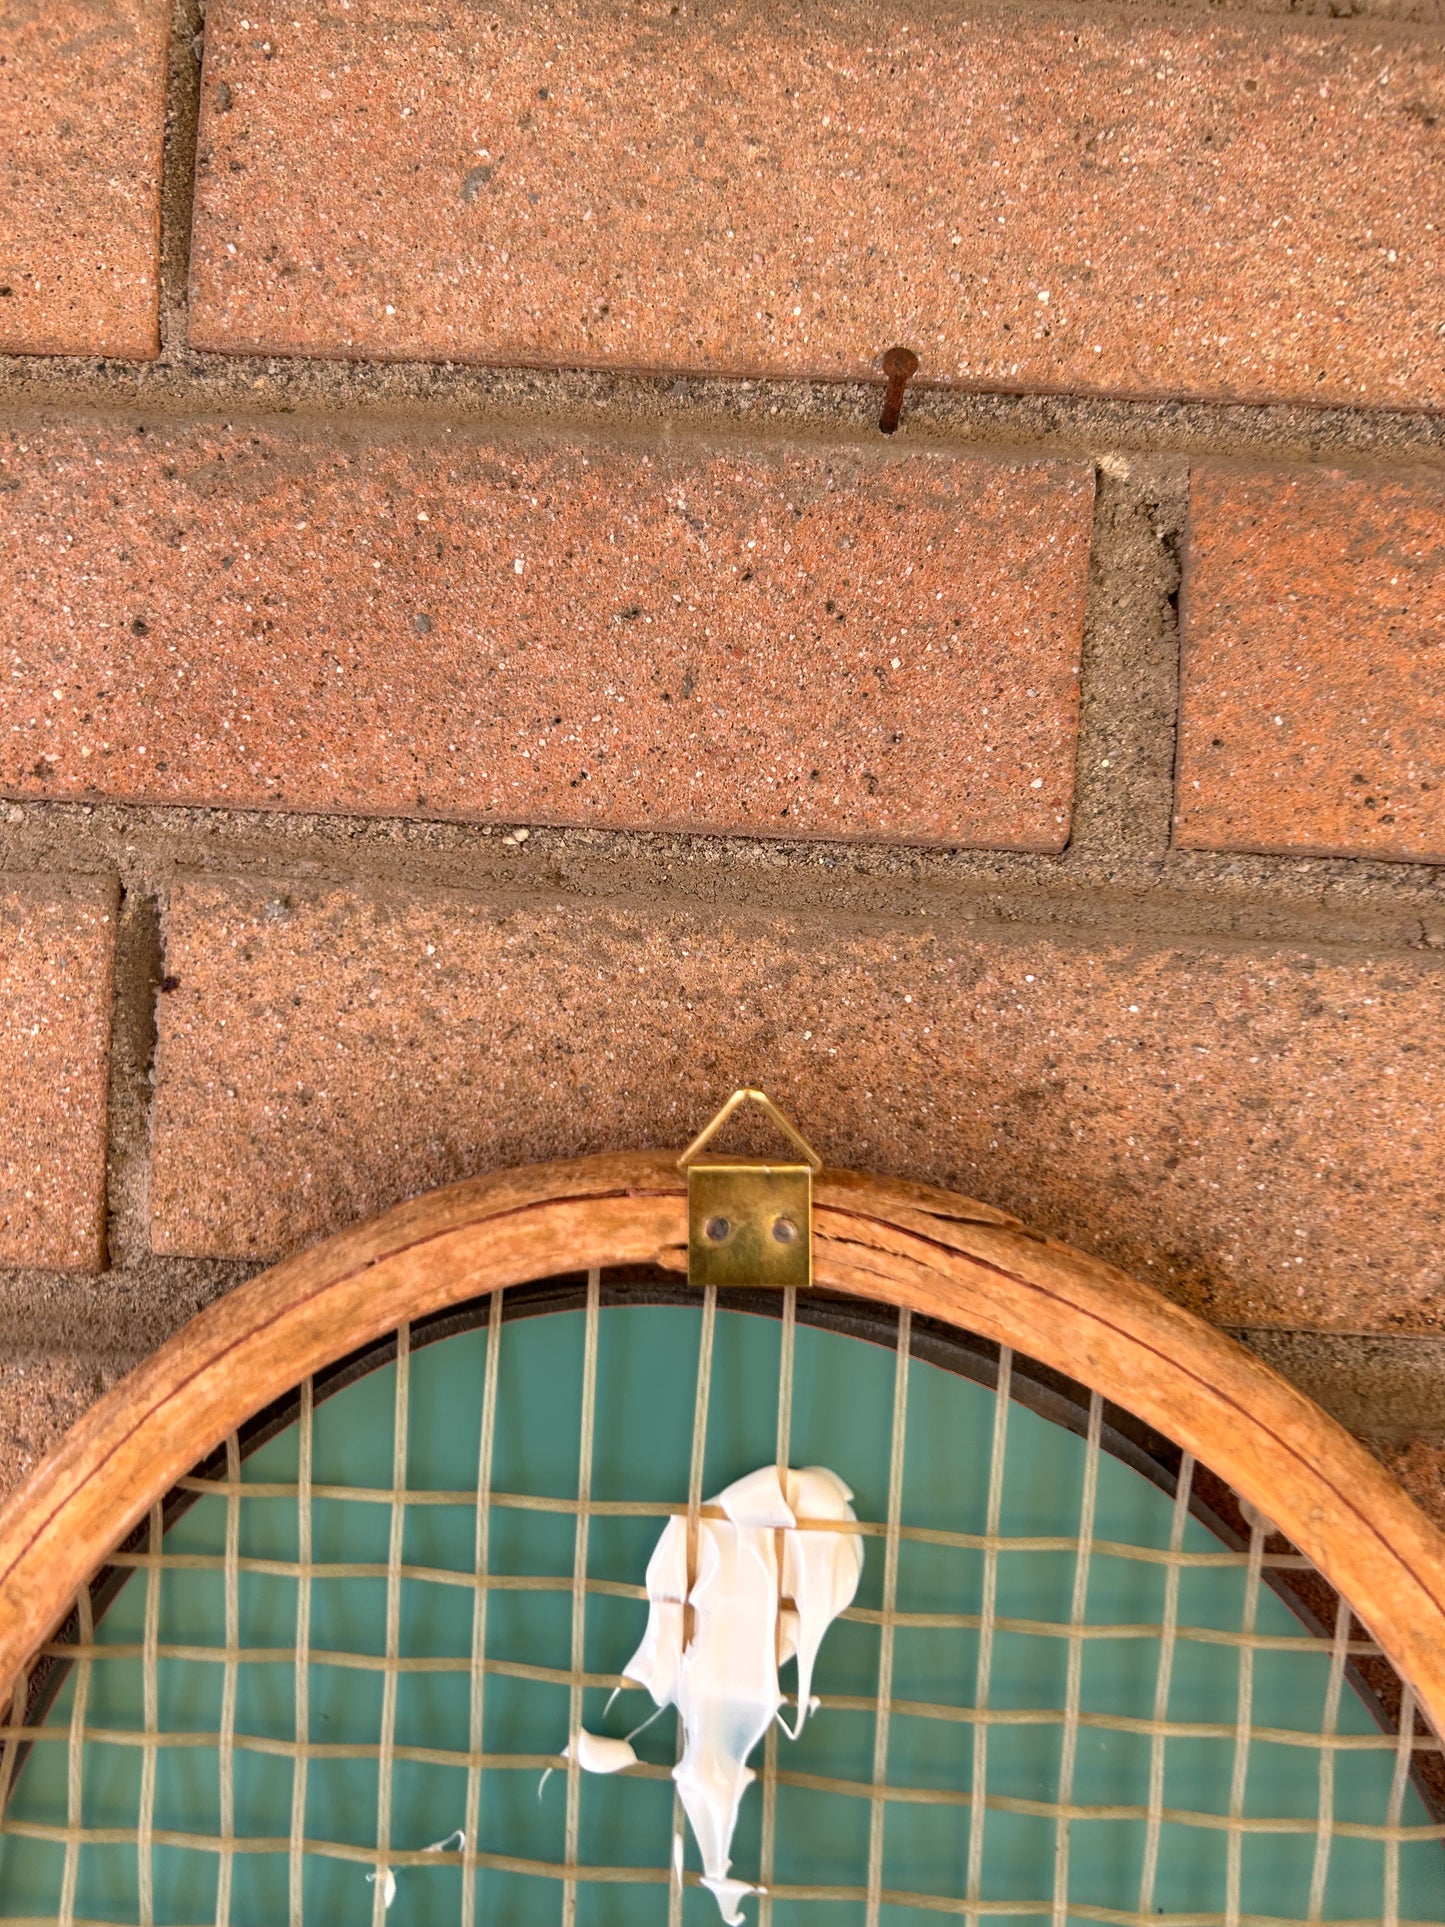 Racchetta da Tennis Vintage Maxima in Legno con Specchio- Vintage Mirror wood Racket